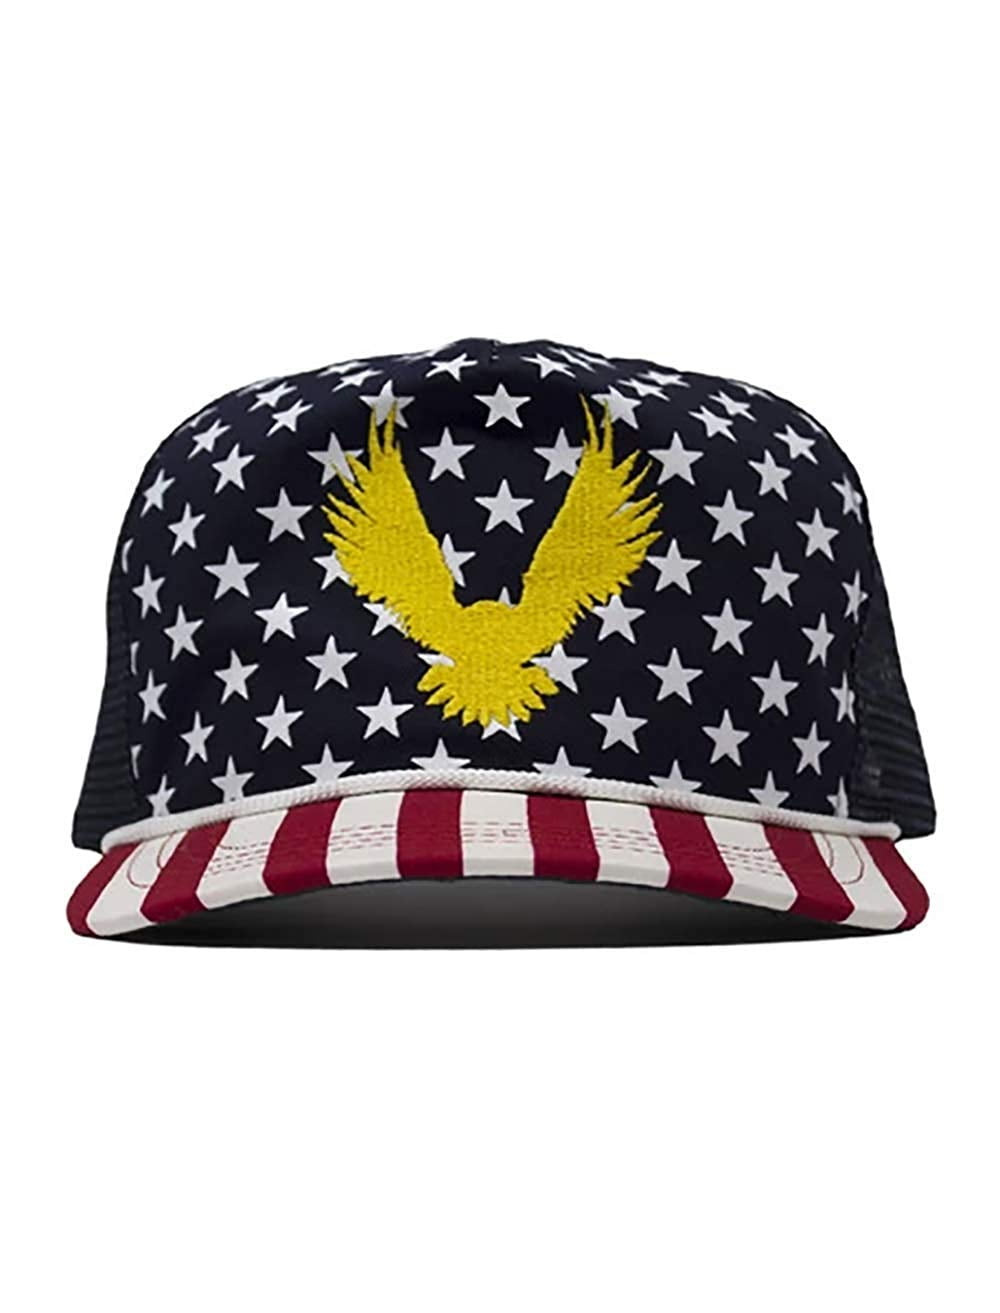 Trump MAGA Hat Keeping America Great US Flag Eagle Print Front Hat 